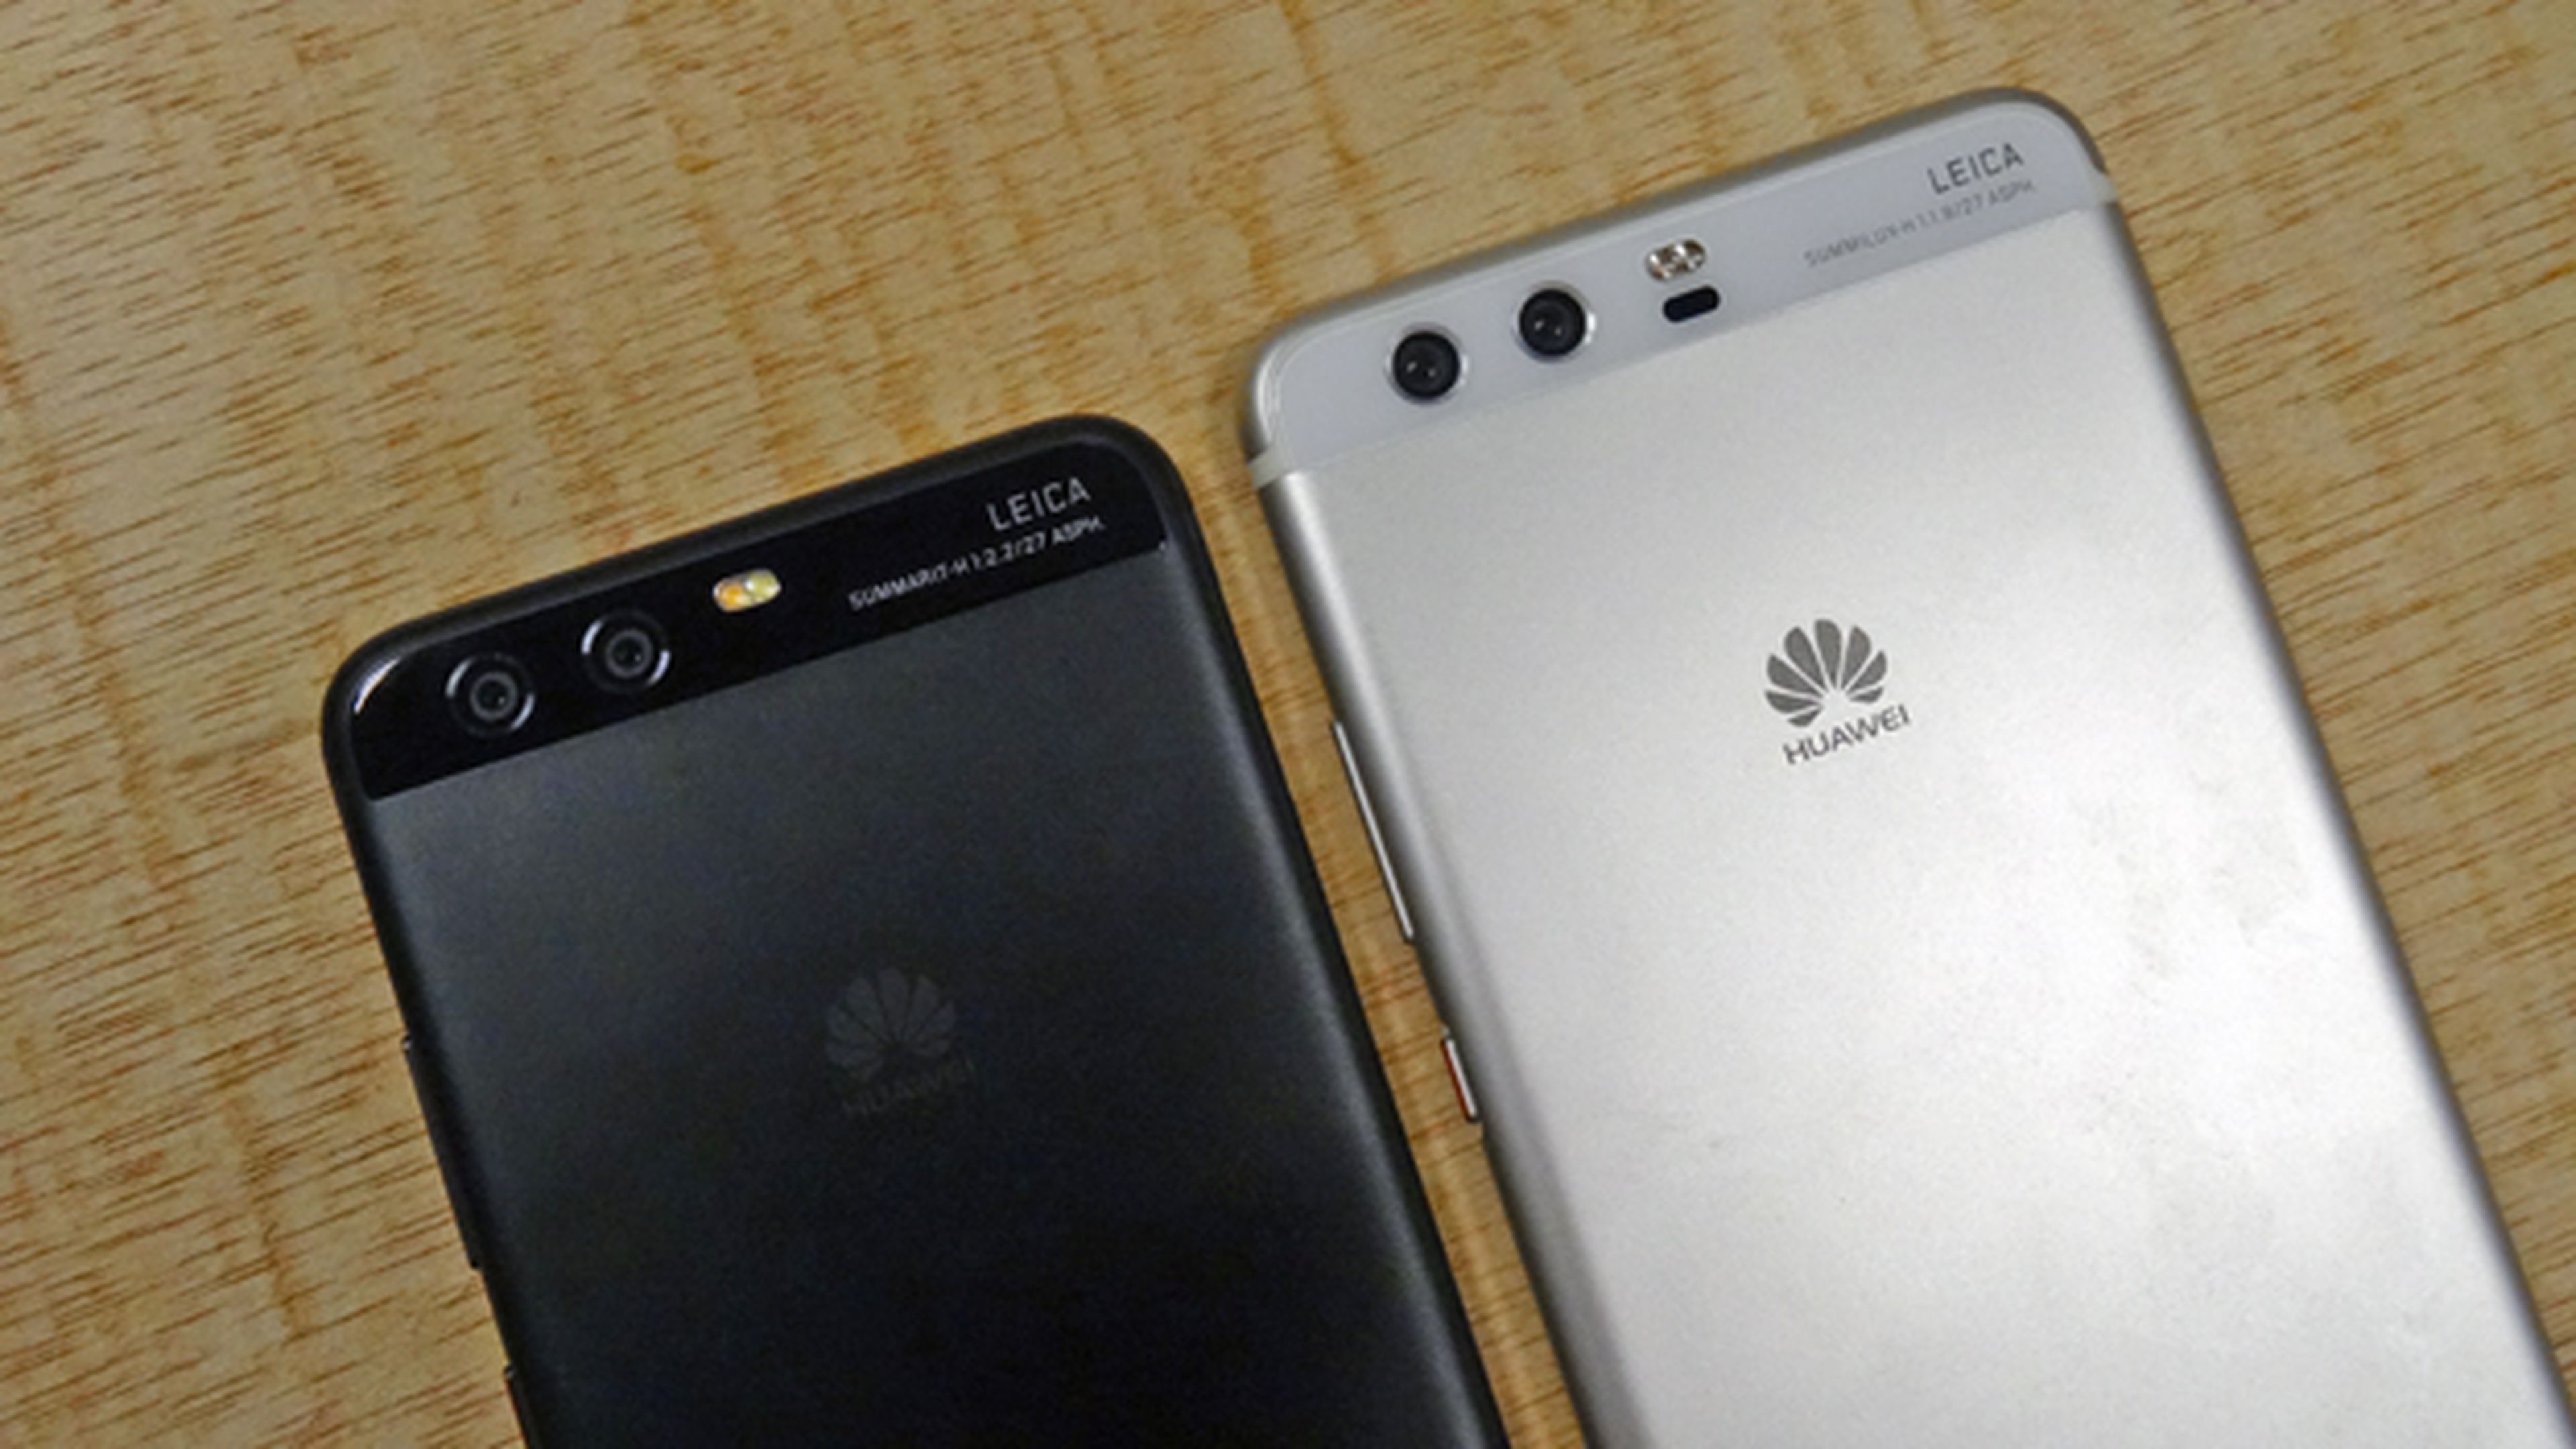 Huawei P10 contra Huawei P10 Plus, comparativa de cámaras